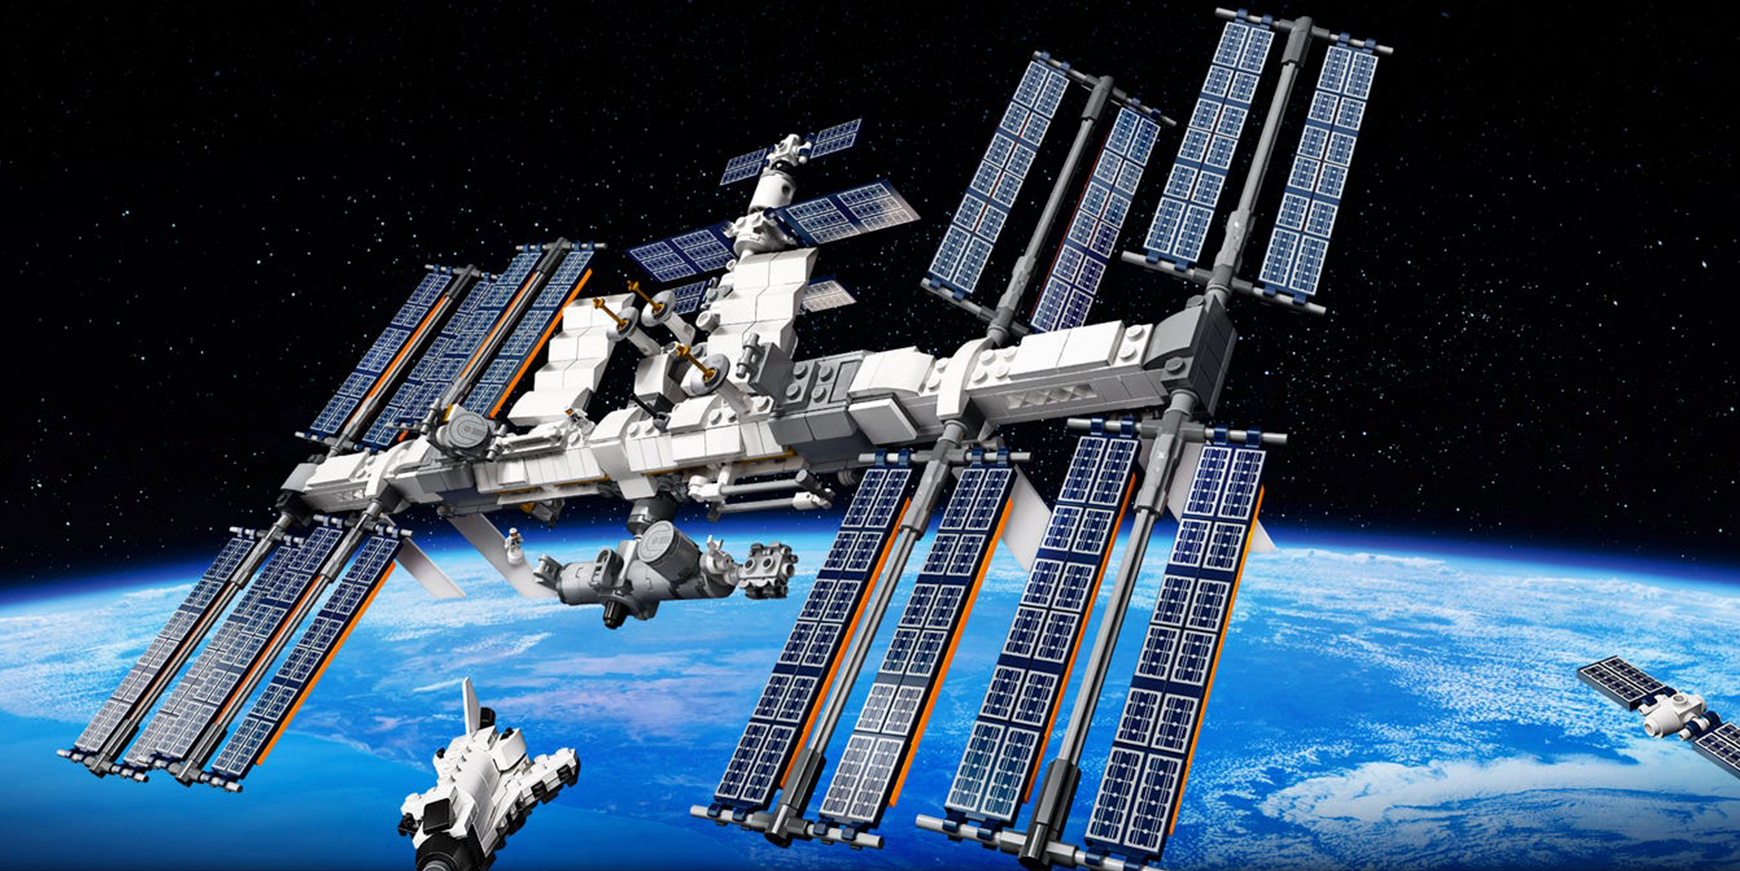 Den Internationale Rumstation